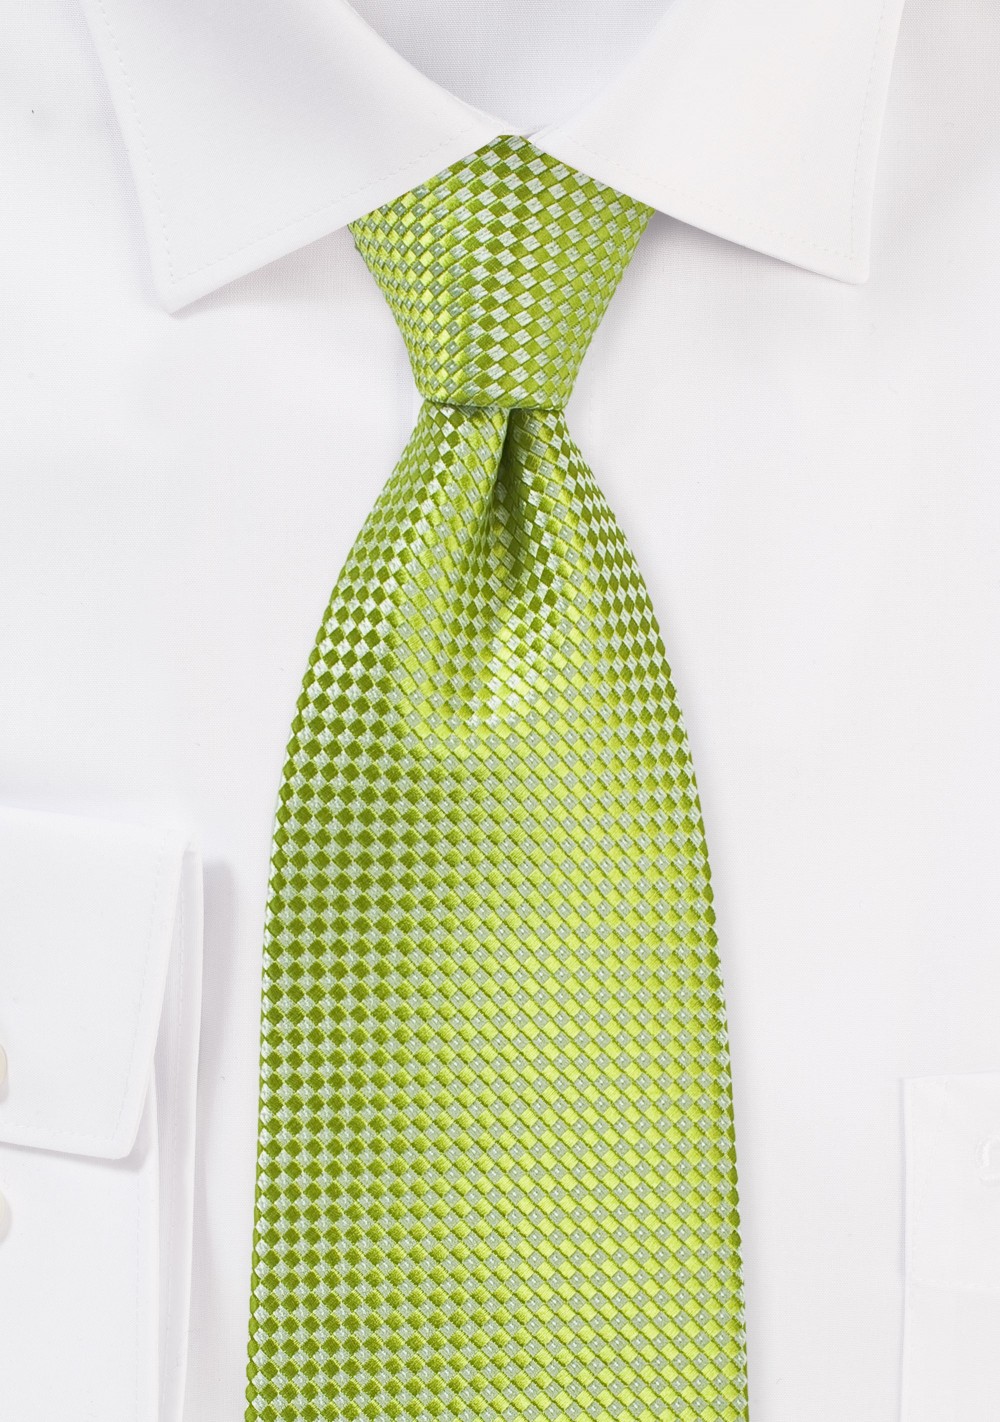 Textured XL Length Tie in Parrot Green